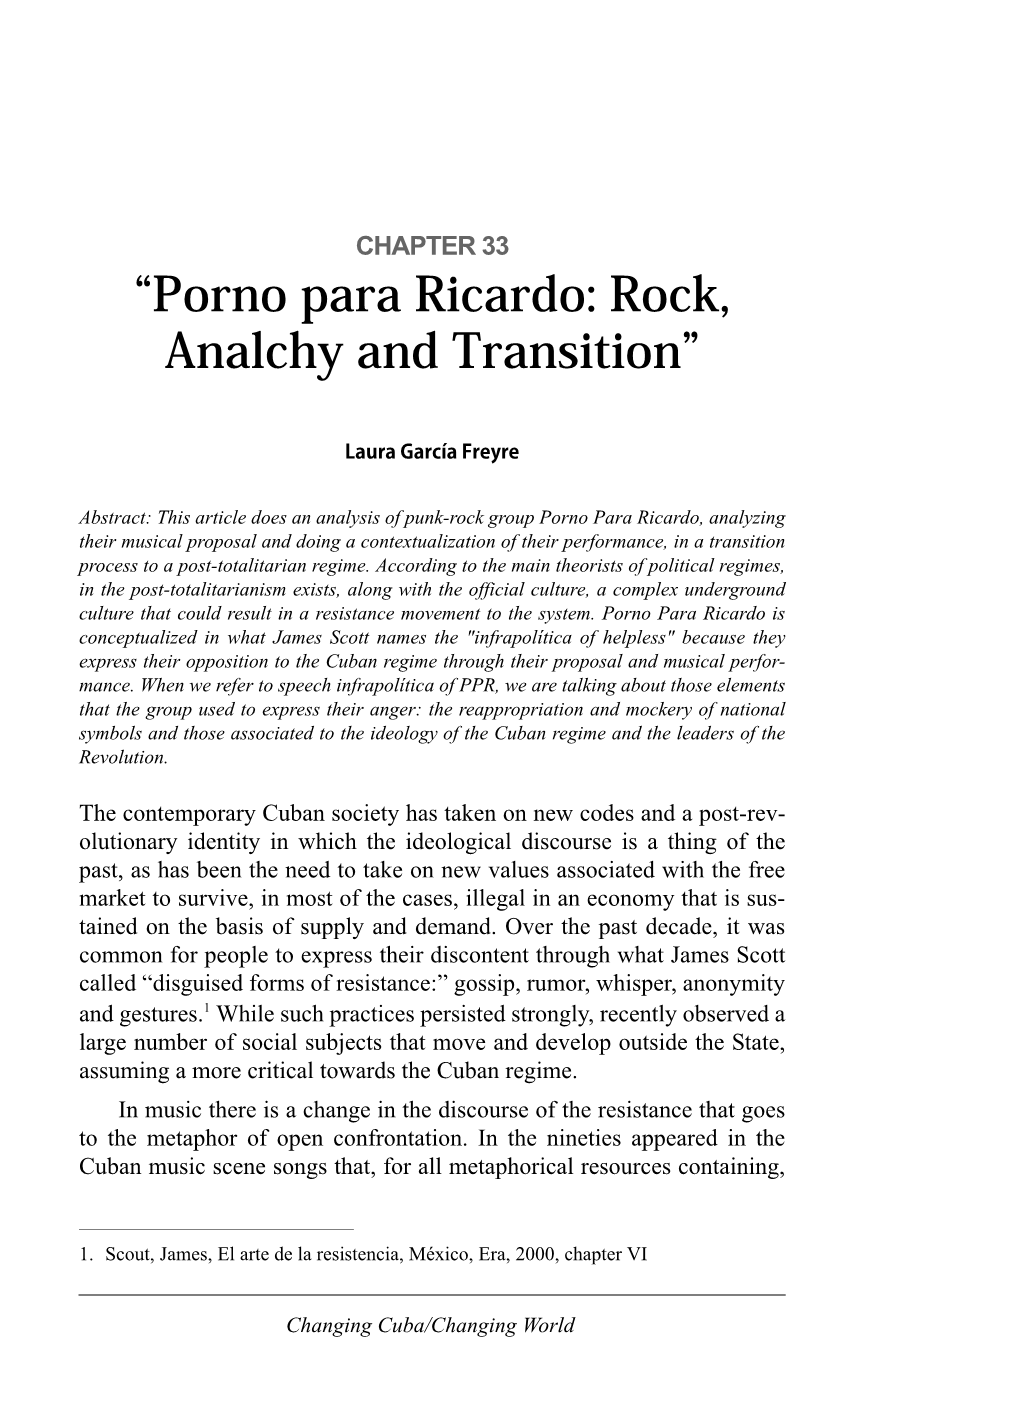 Porno Para Ricardo: Rock, Analchy and Transition”